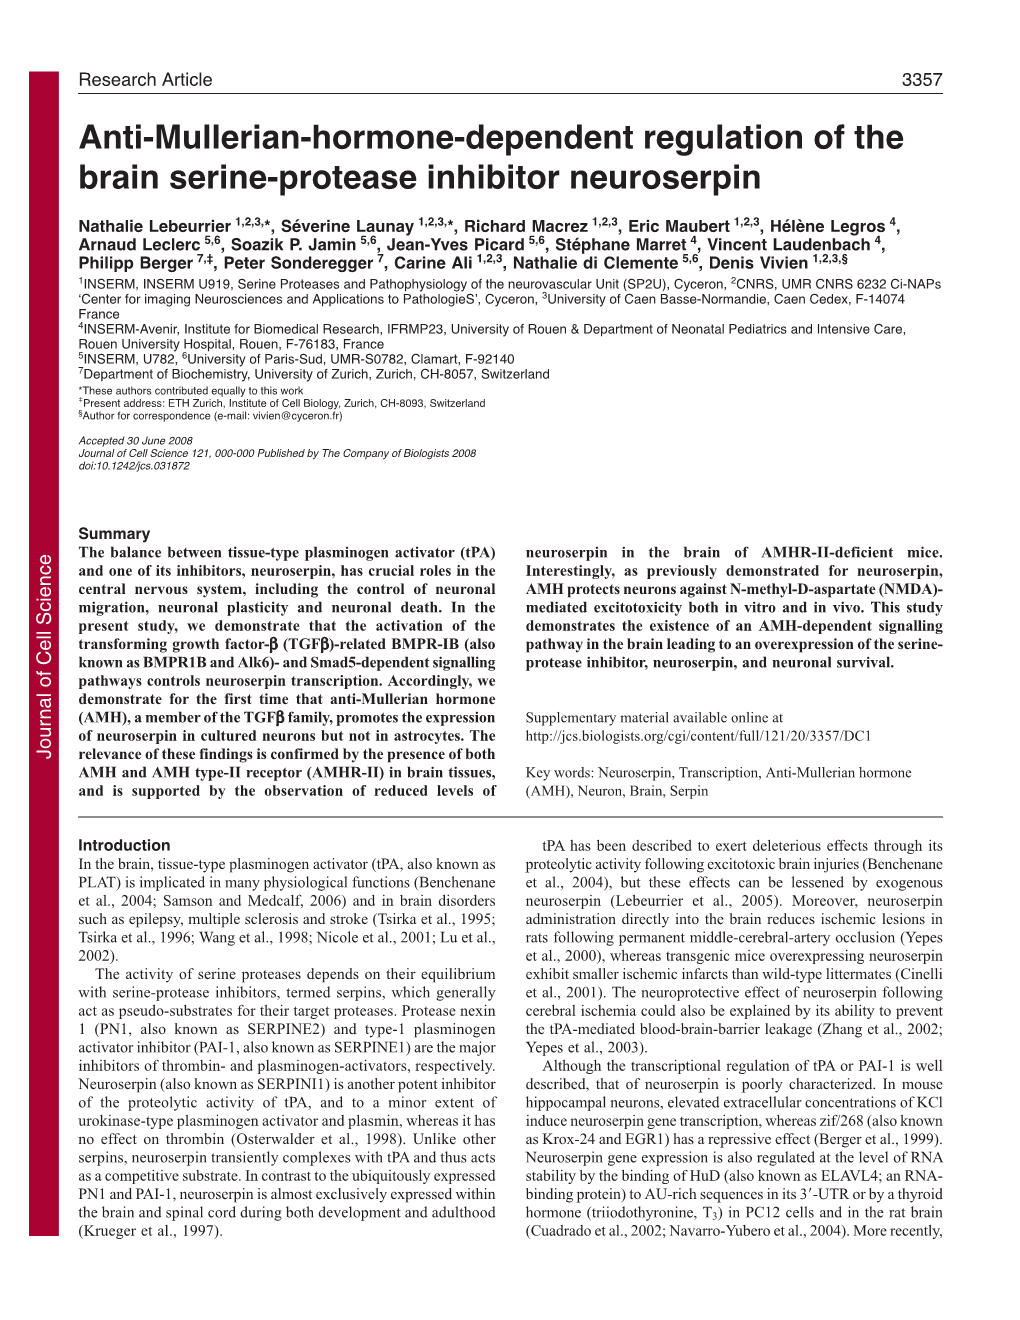 Anti-Mullerian-Hormone-Dependent Regulation of the Brain Serine-Protease Inhibitor Neuroserpin